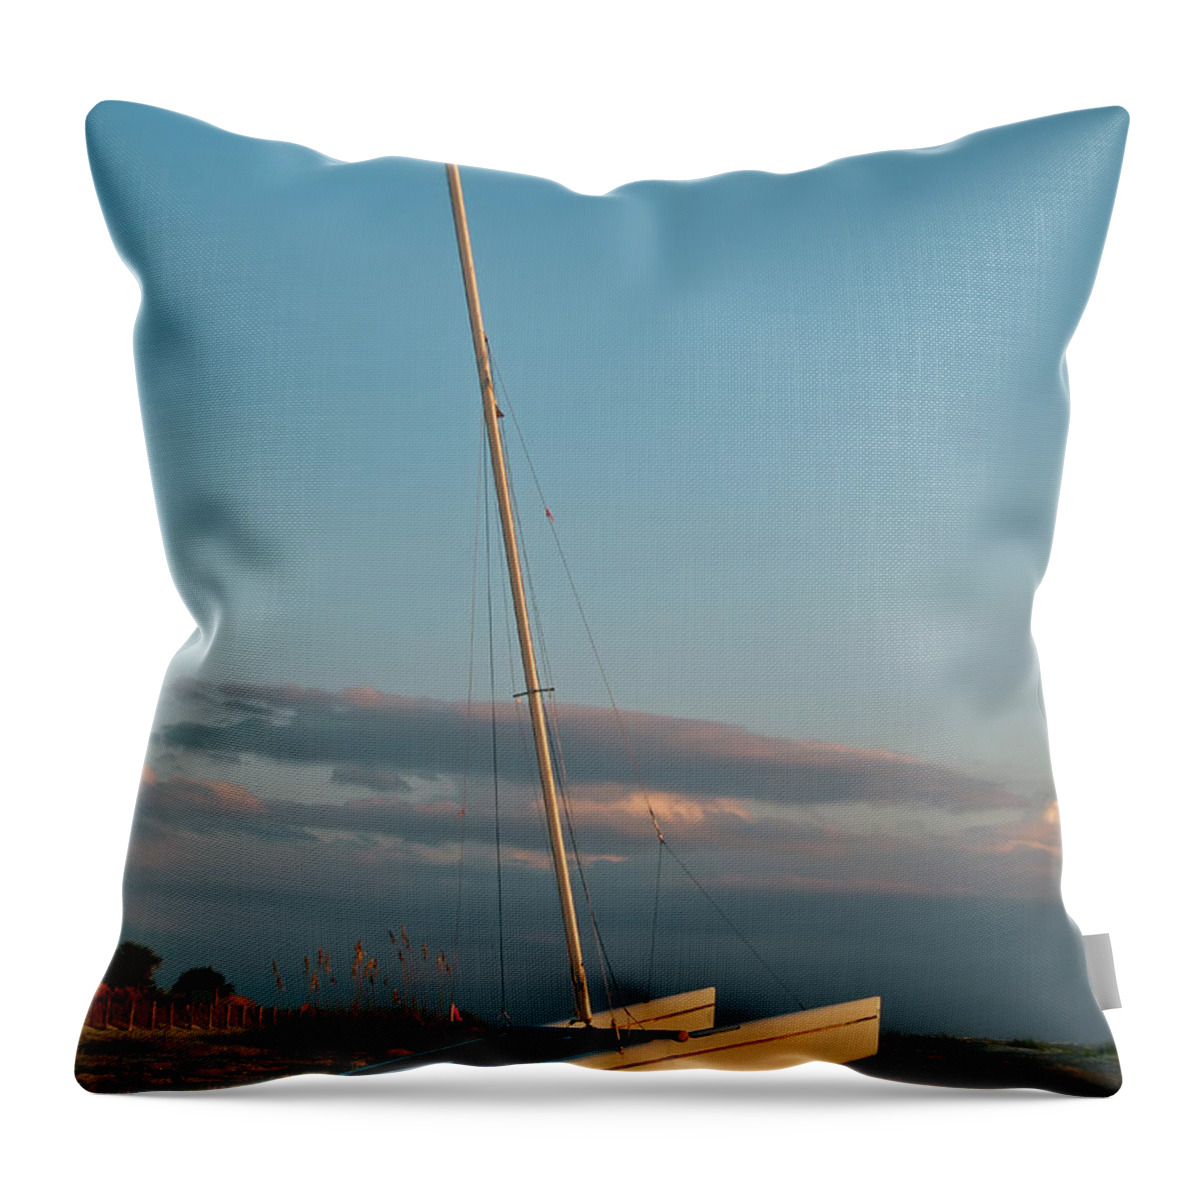 Outdoors Throw Pillow featuring the photograph Catamaran On Beach by Joseph Shields